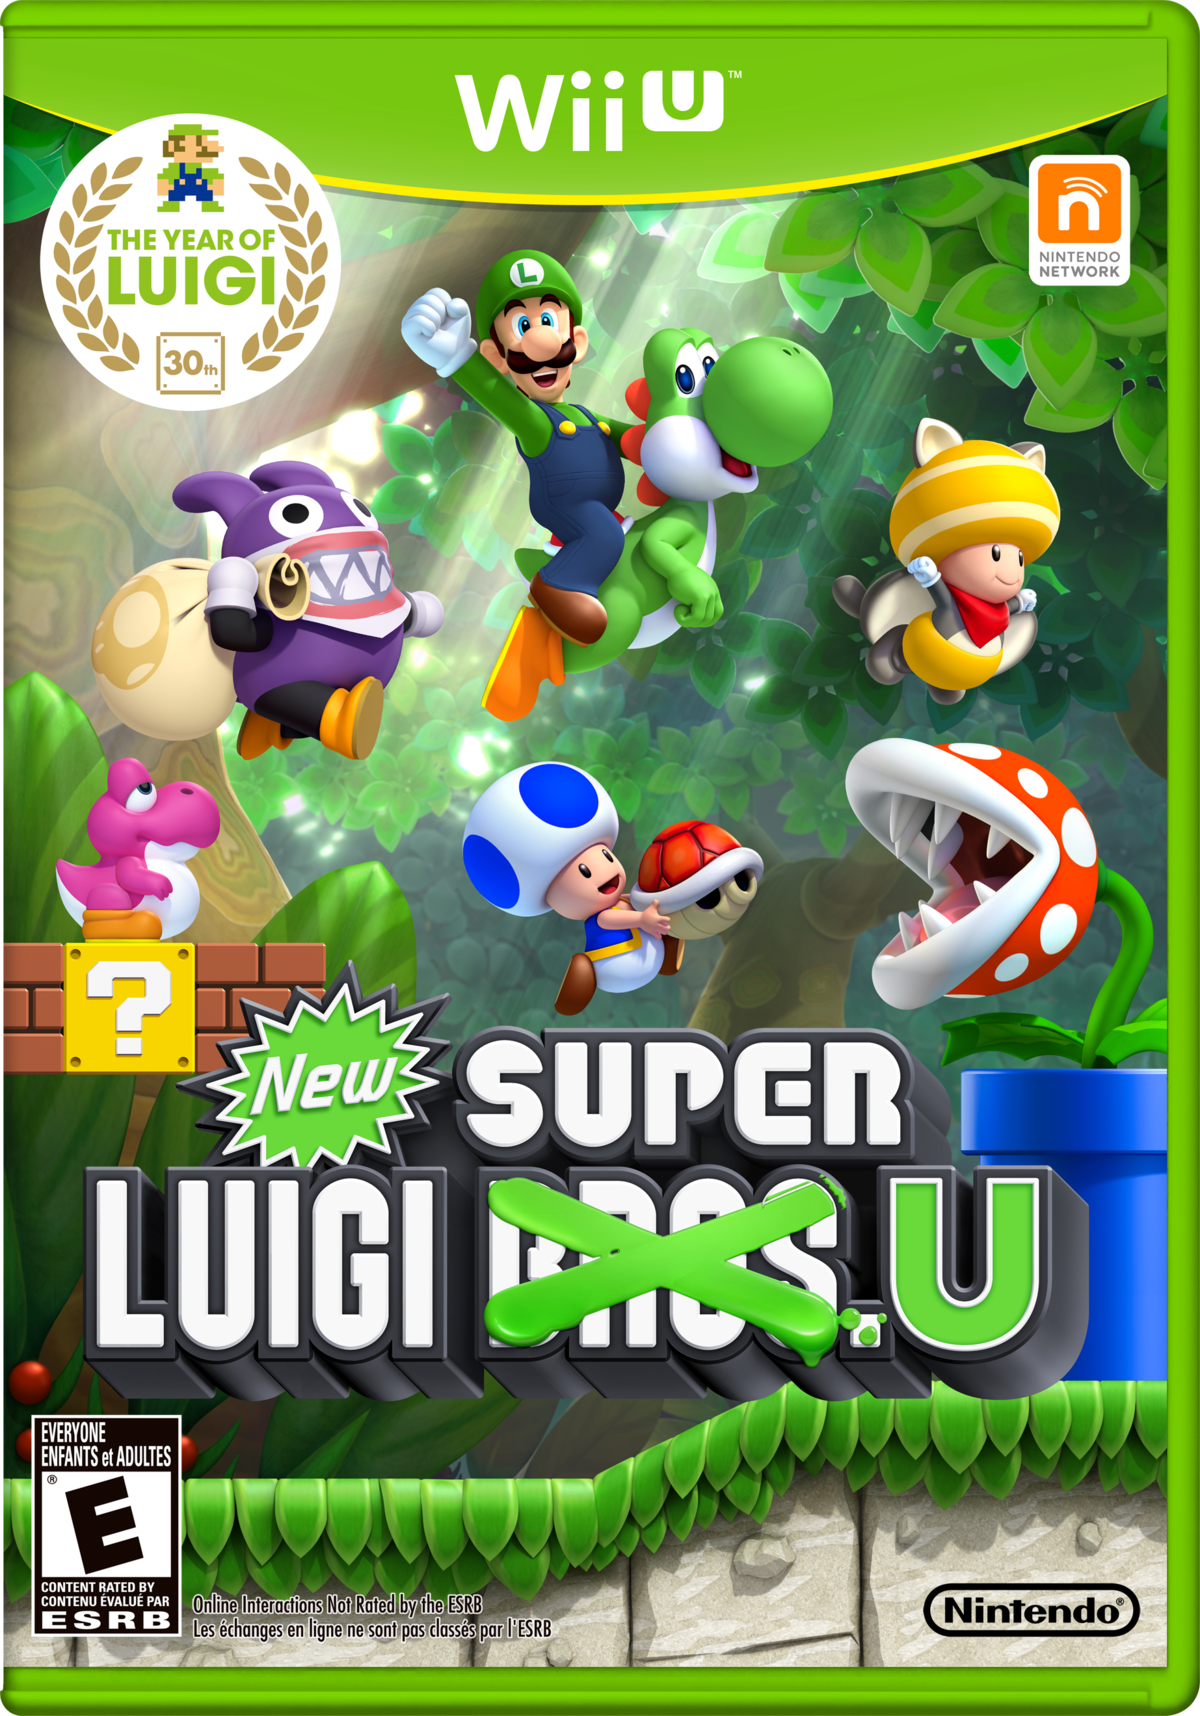 New Super Luigi U Super Mario Wiki The Mario Encyclopedia